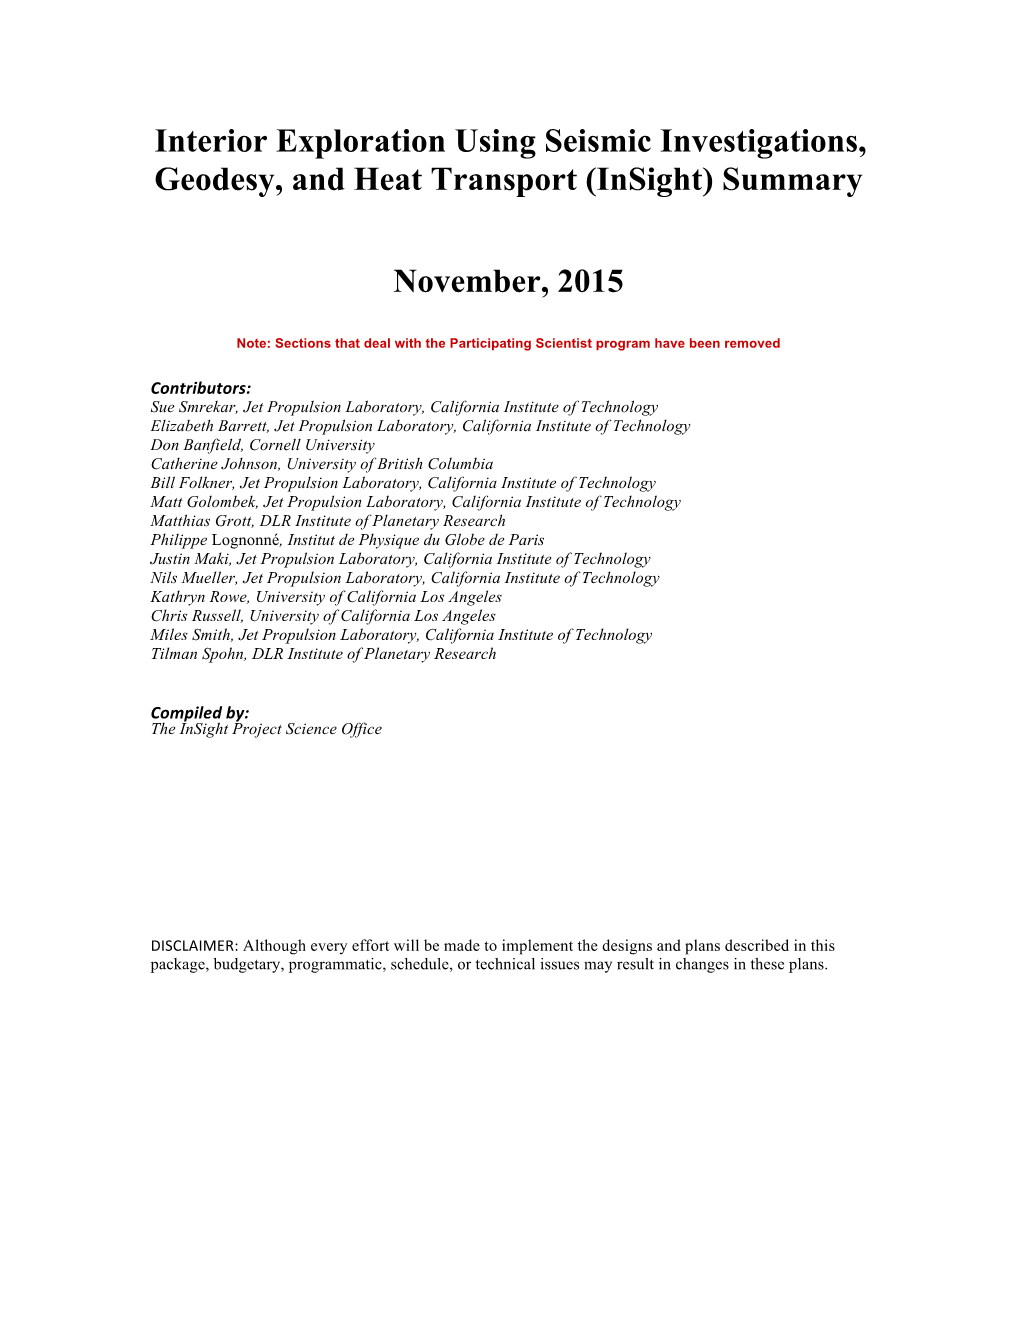 Interior Exploration Using Seismic Investigations, Geodesy, and Heat Transport (Insight) Summary